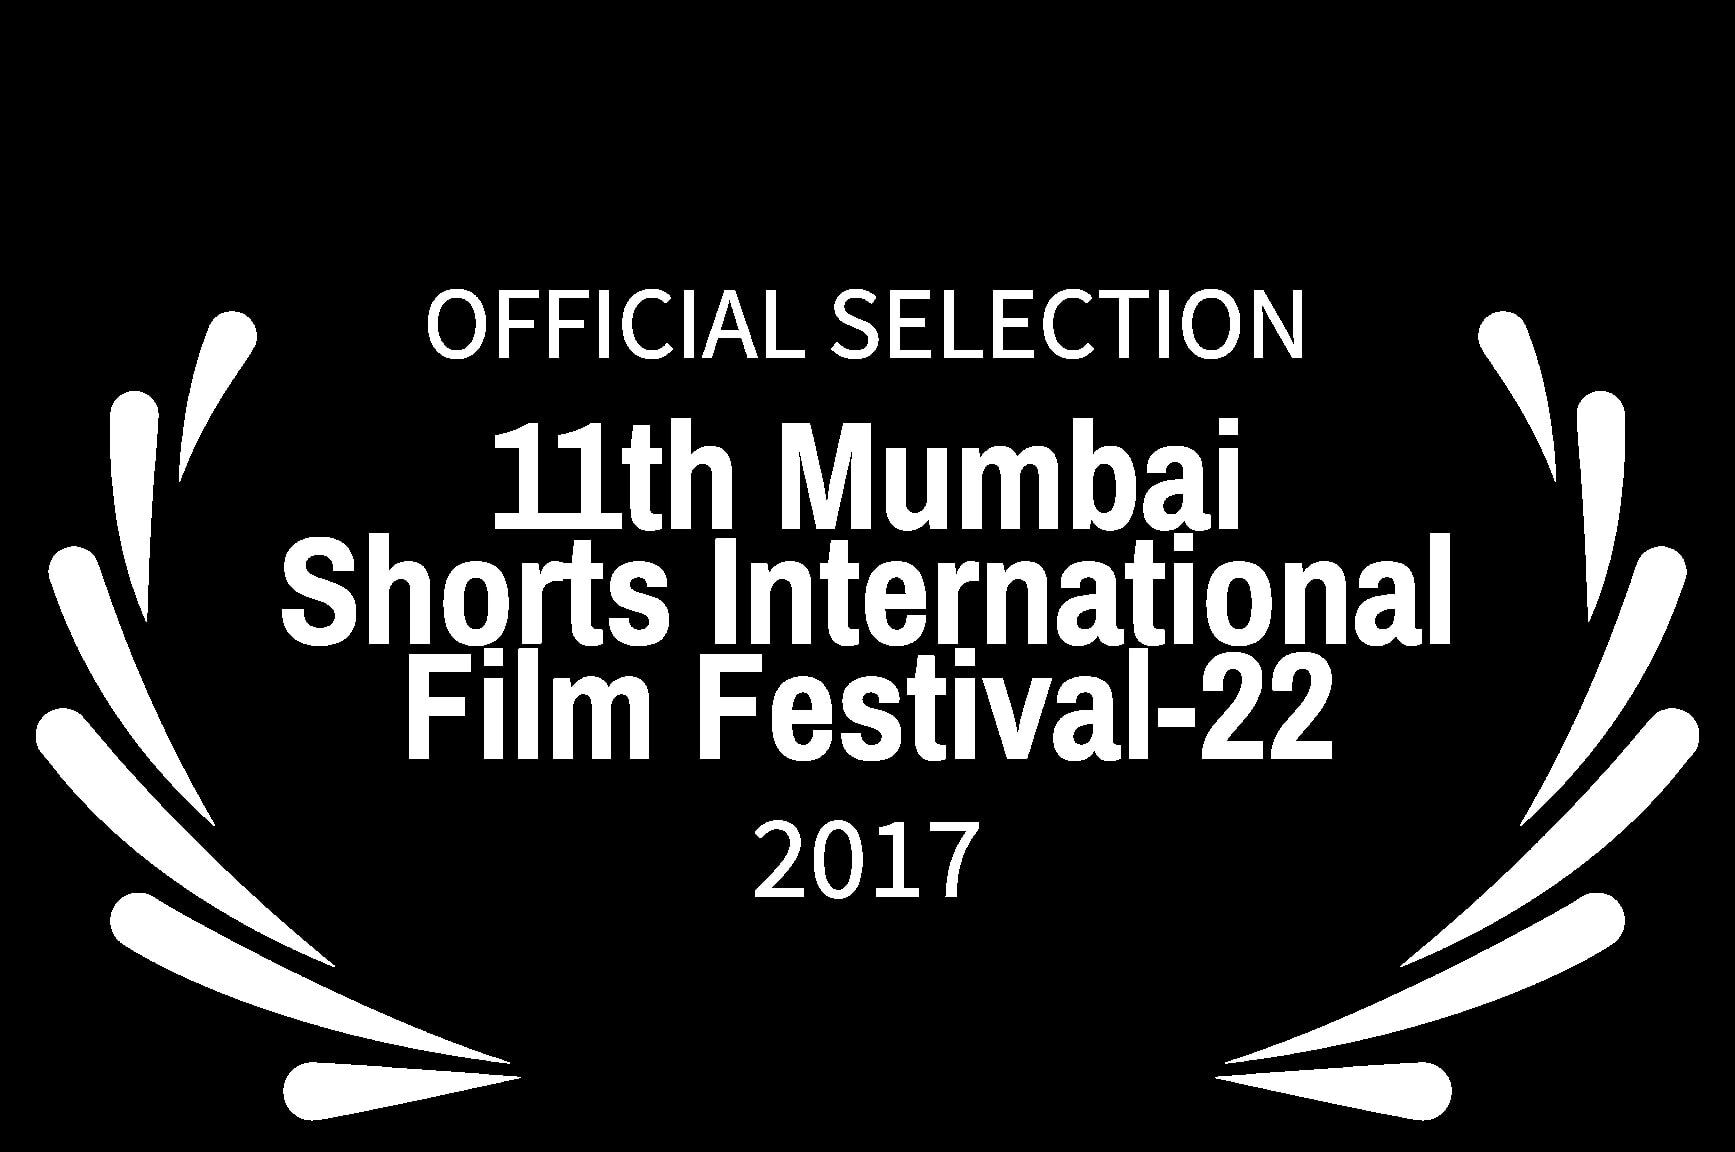 OFFICIAL SELECTION - 11th Mumbai Shorts International Film Festival-22 - 2017 - ICE INC